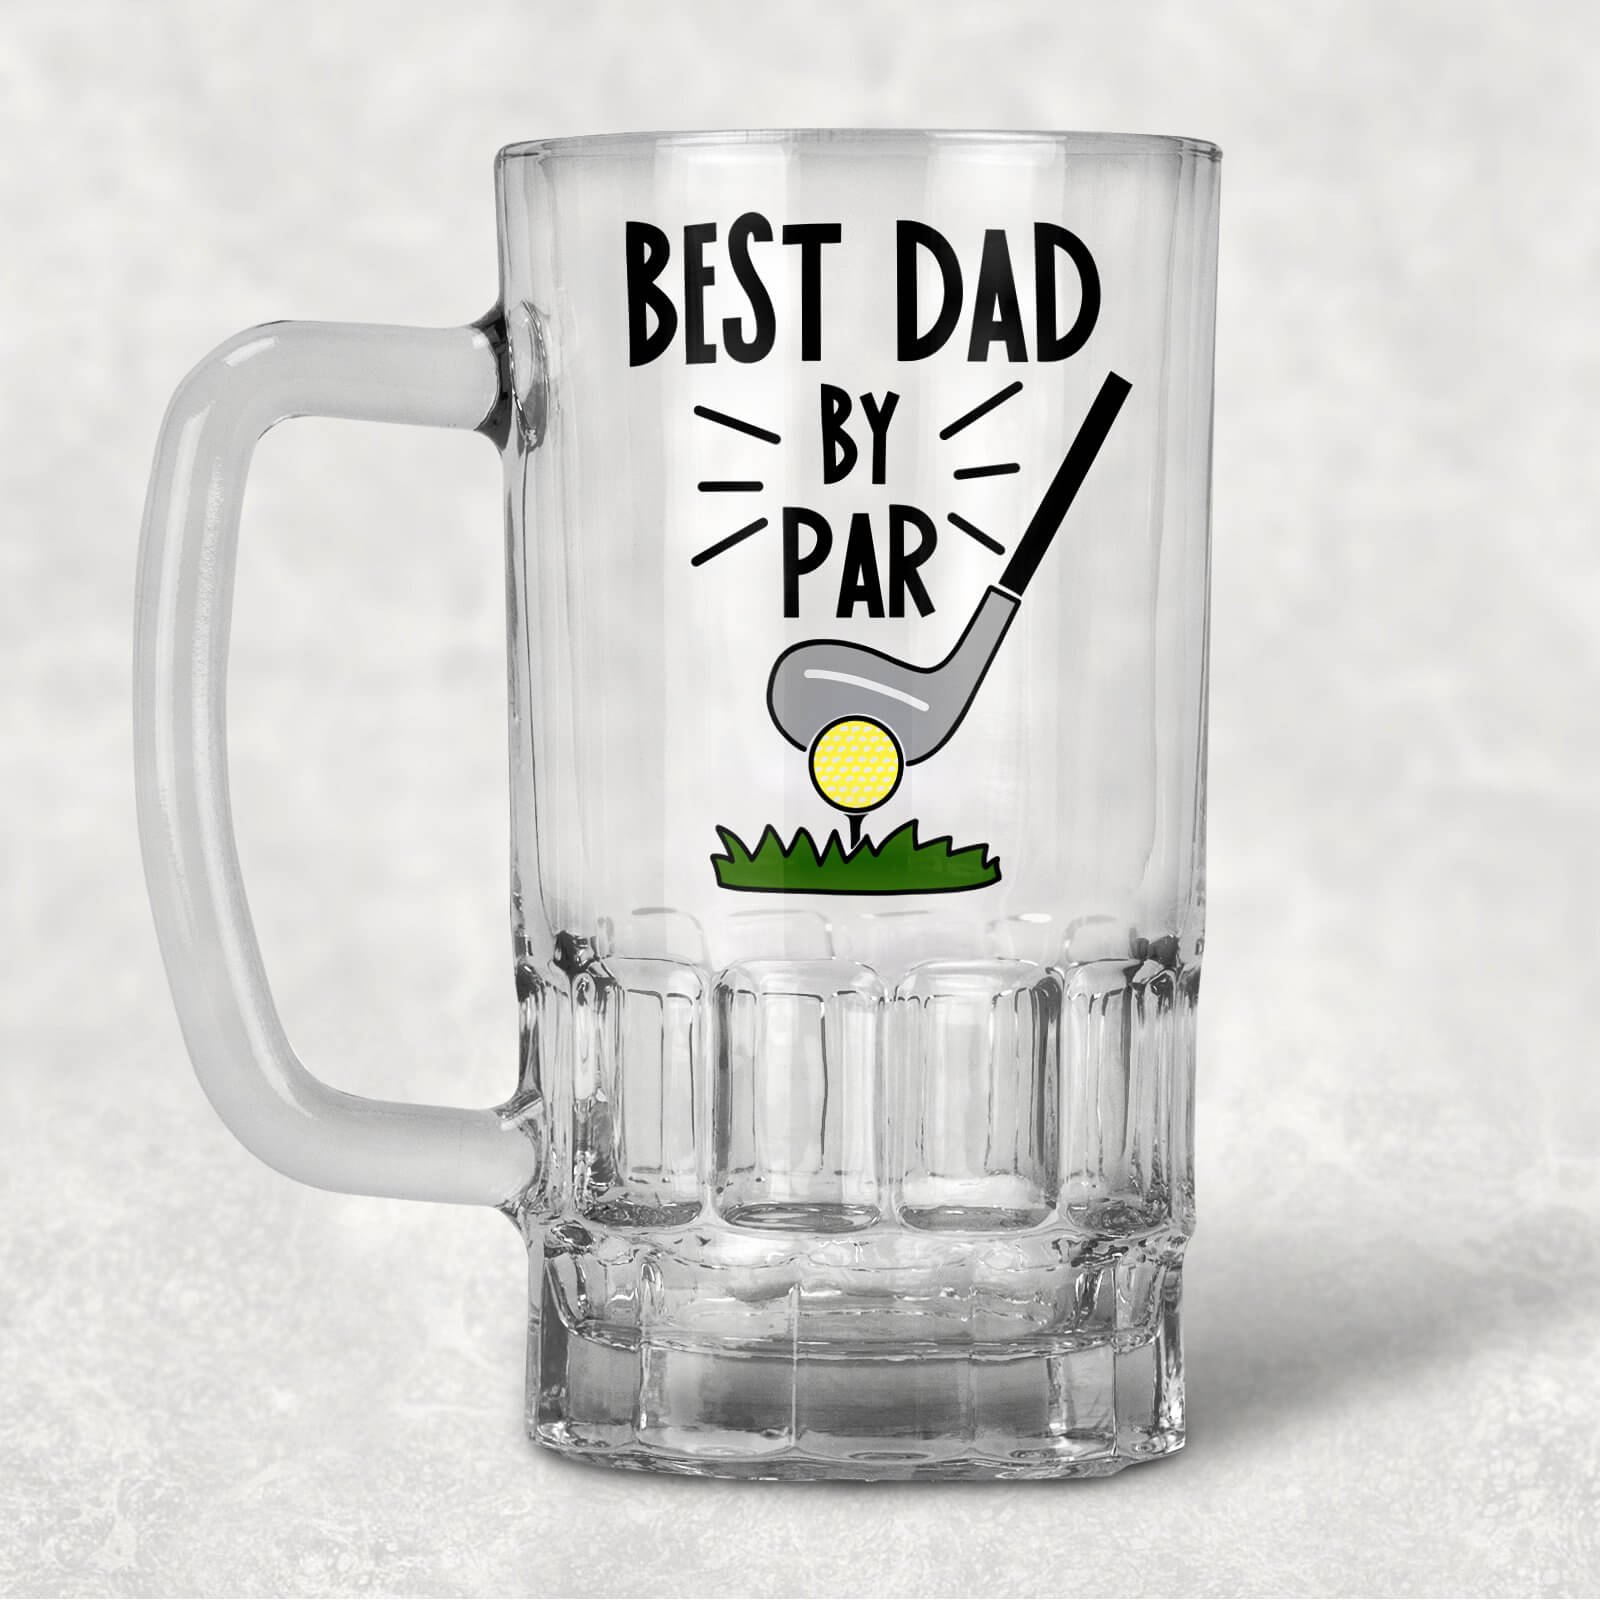 Inscription "Best dad by par" on the glass.